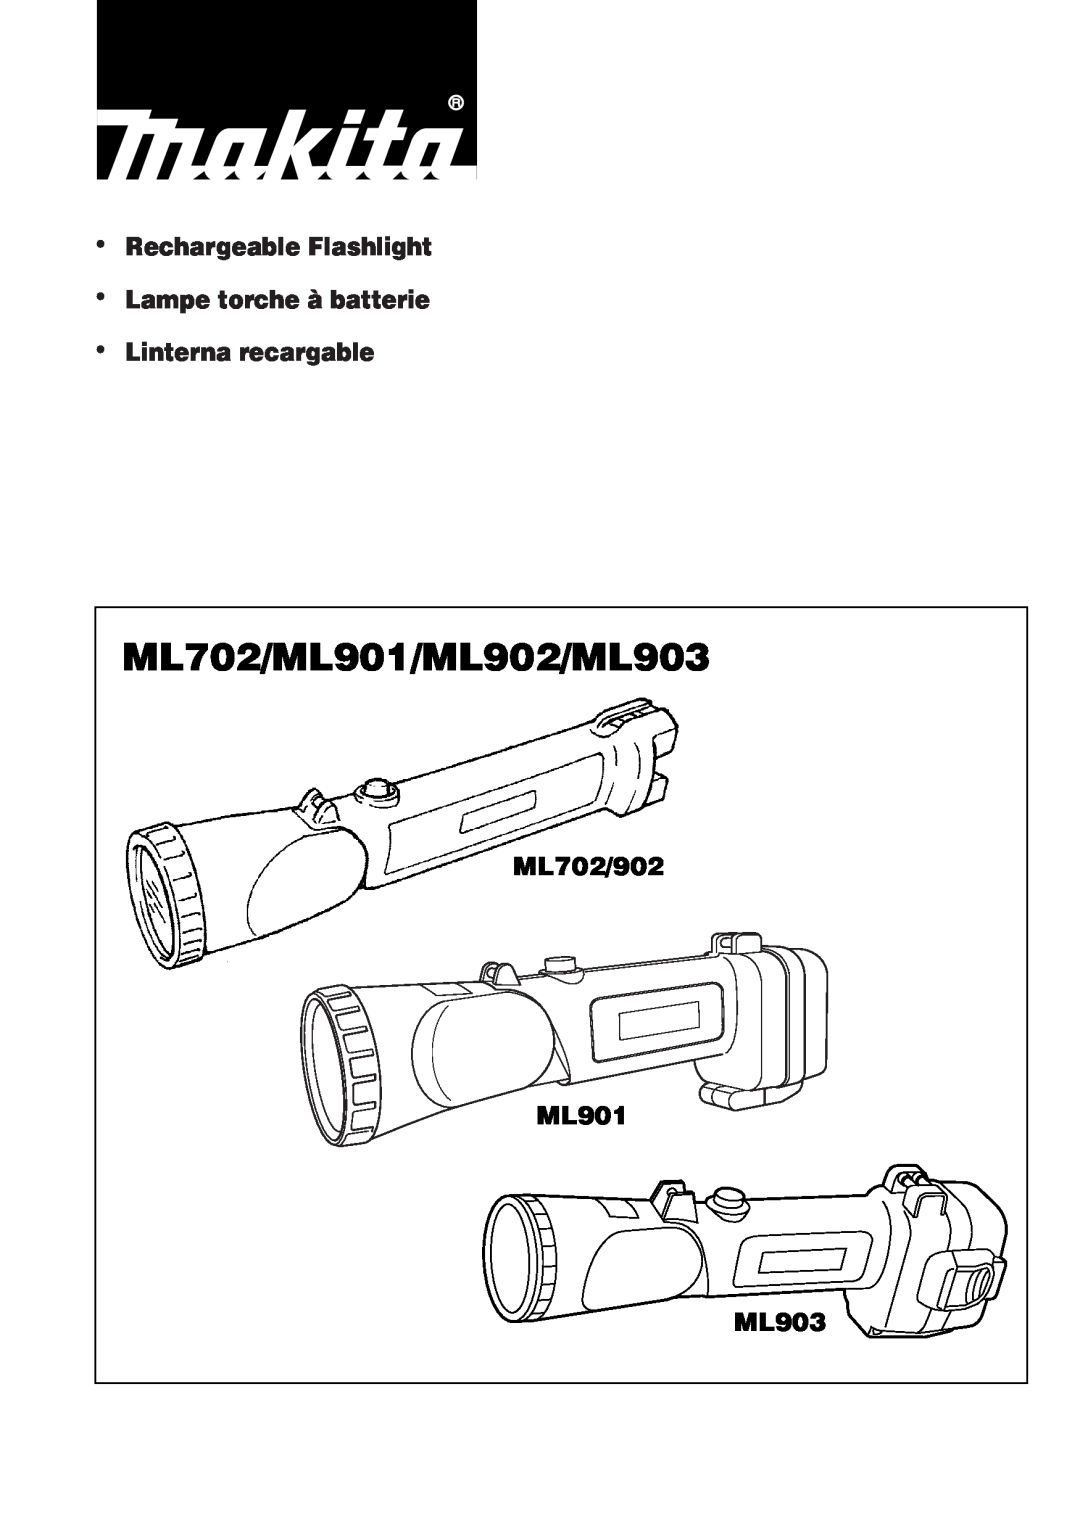 Makita ML902 manual ·Rechargeable Flashlight ·Lampe torche à batterie, ·Linterna recargable, ML702/902 ML901, ML903 